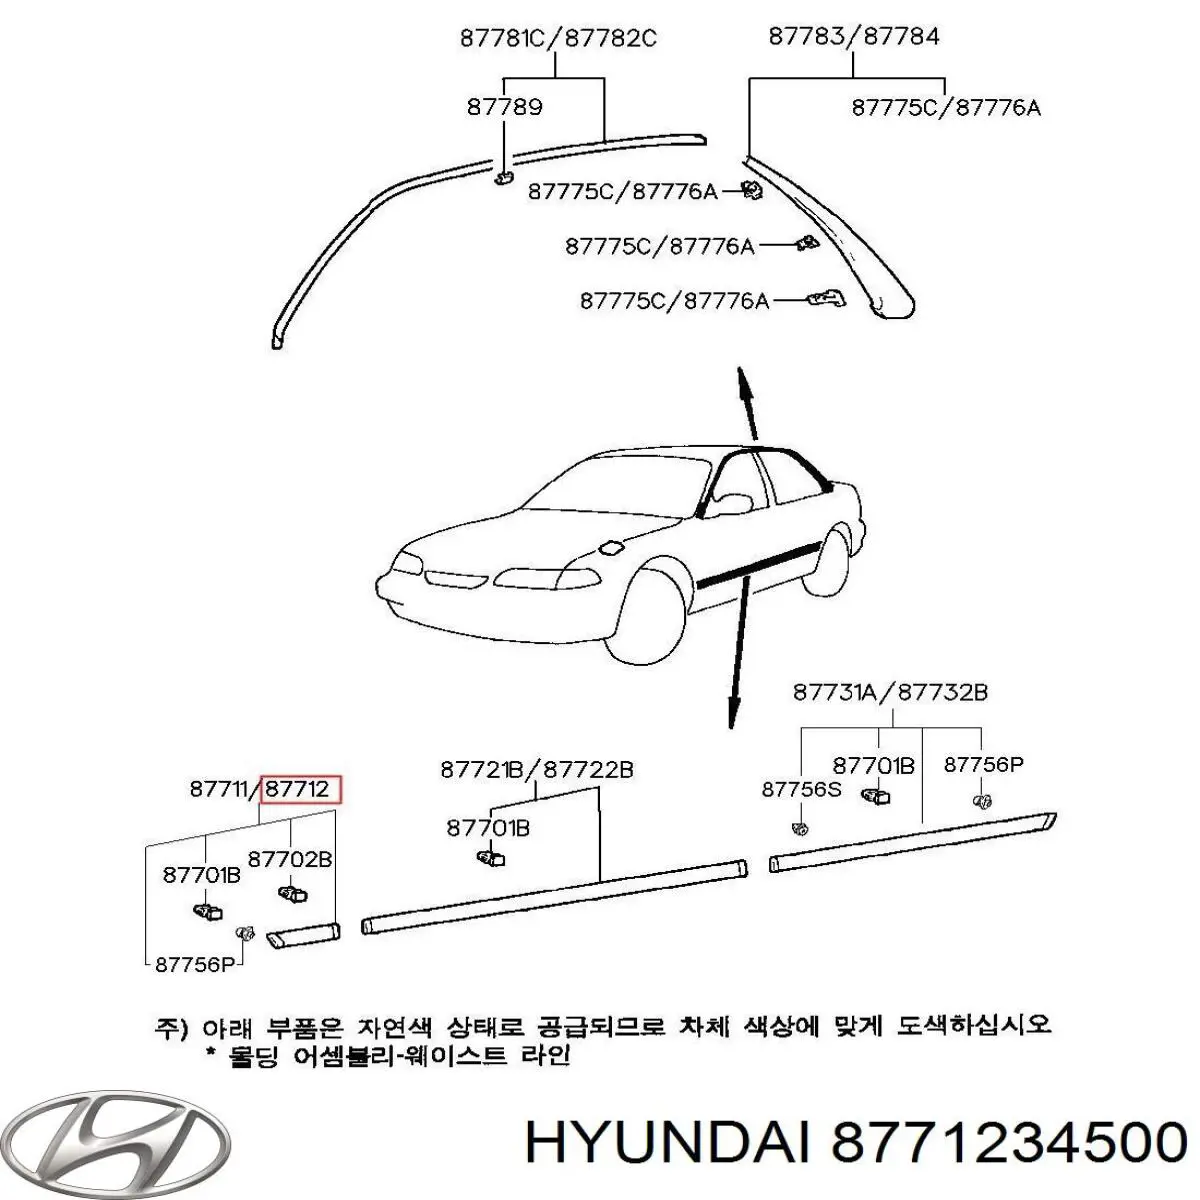 8771234500 Hyundai/Kia молдинг крыла переднего правого